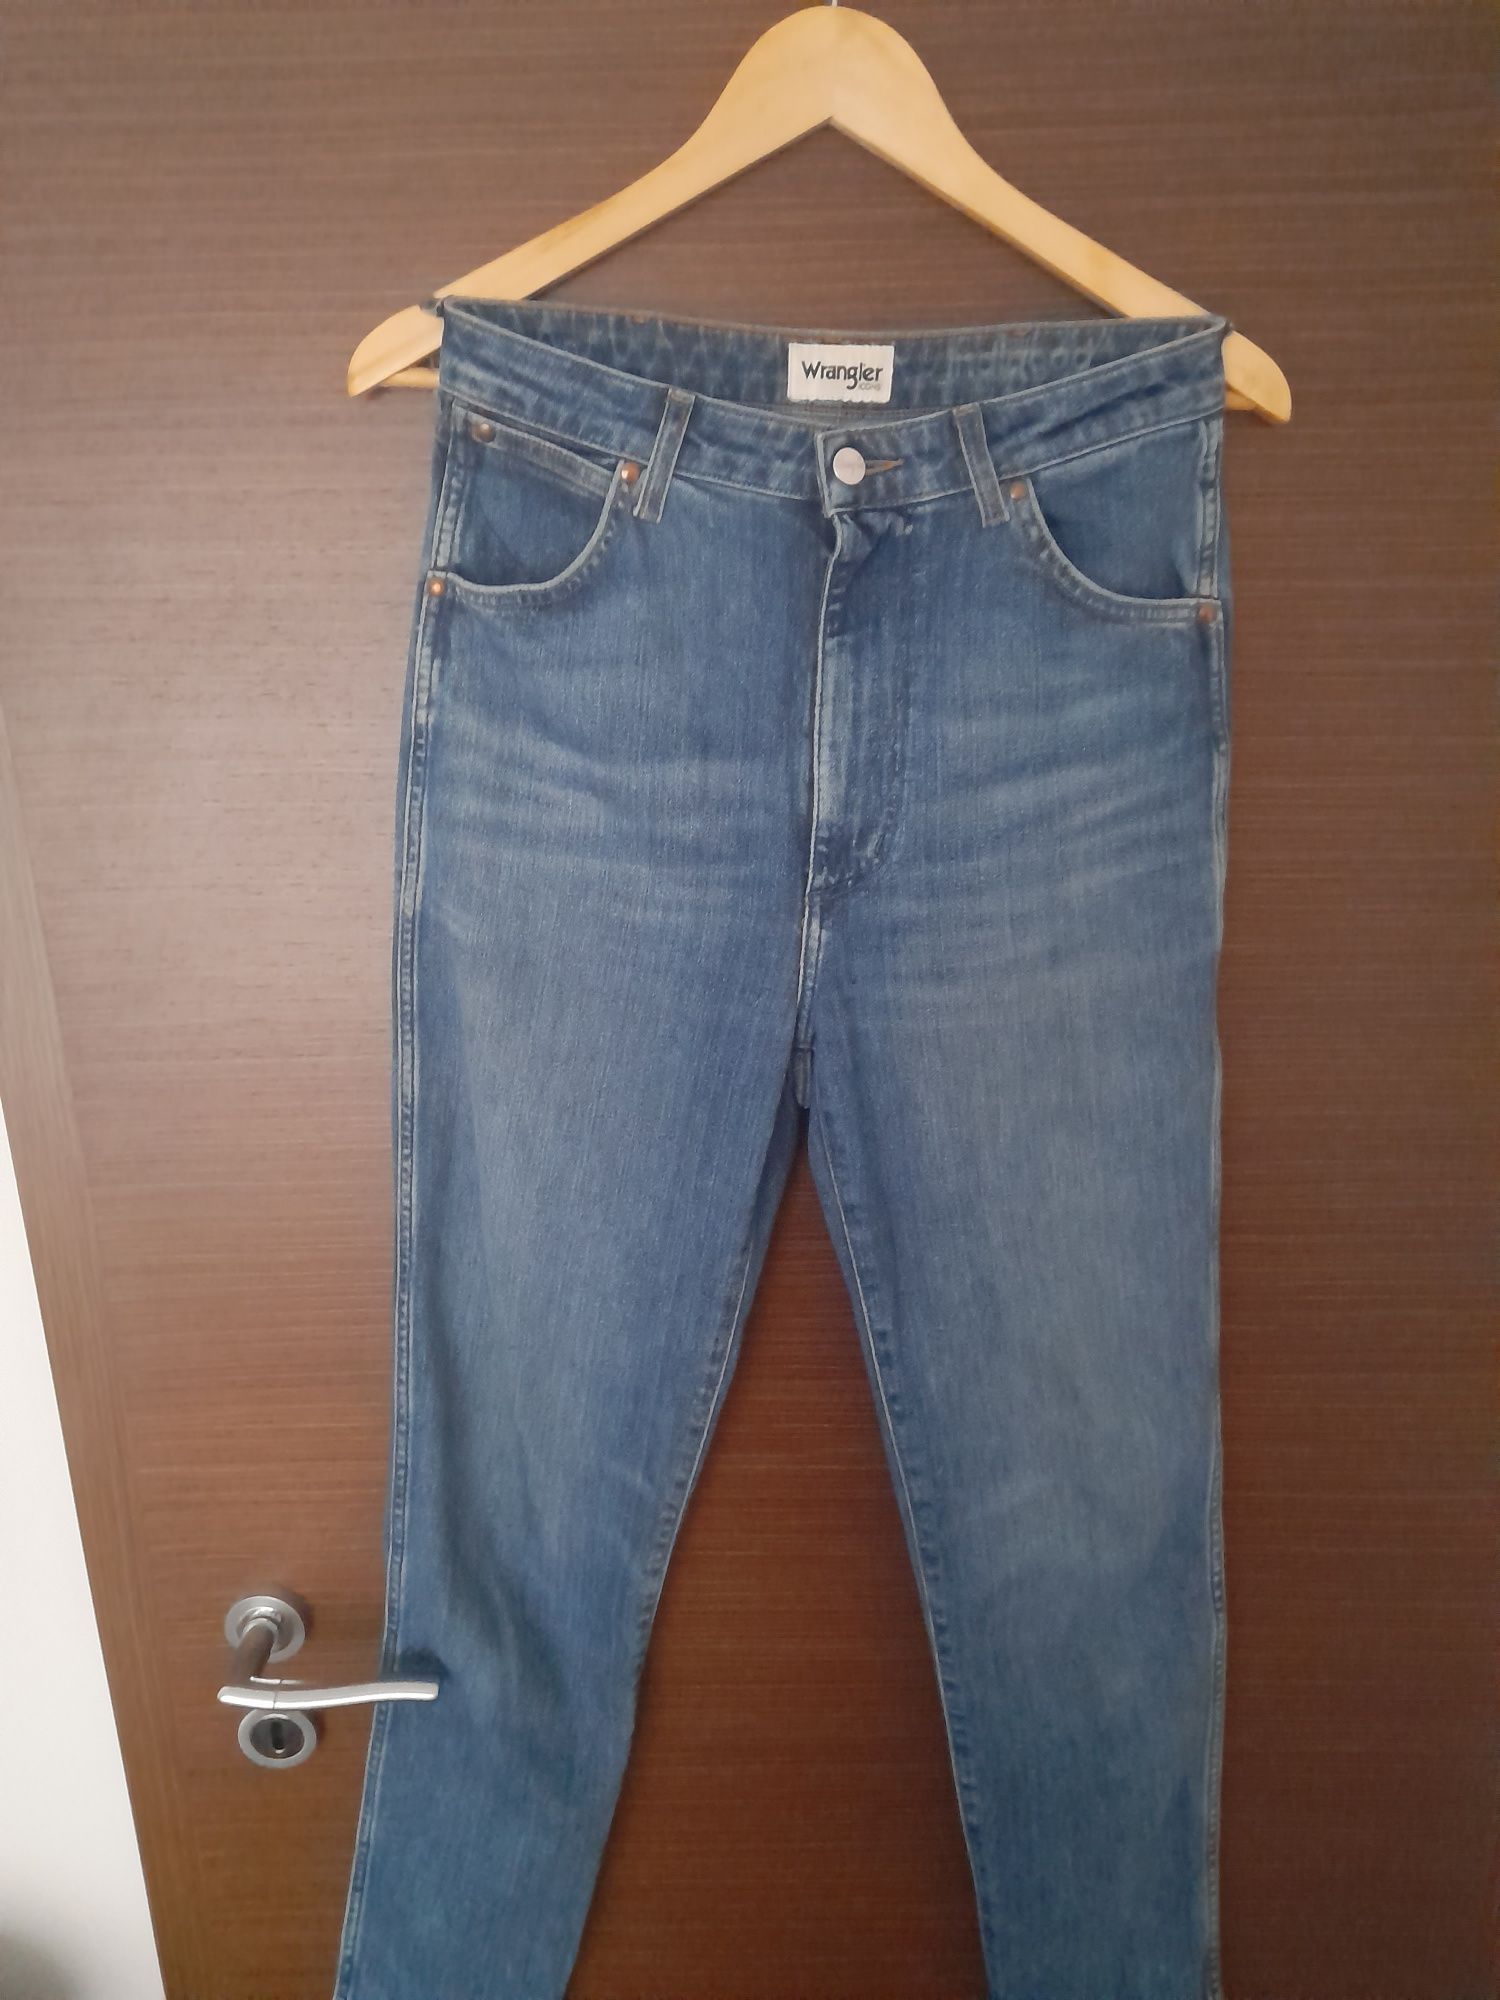 Spodnie damskie wrangler jeans